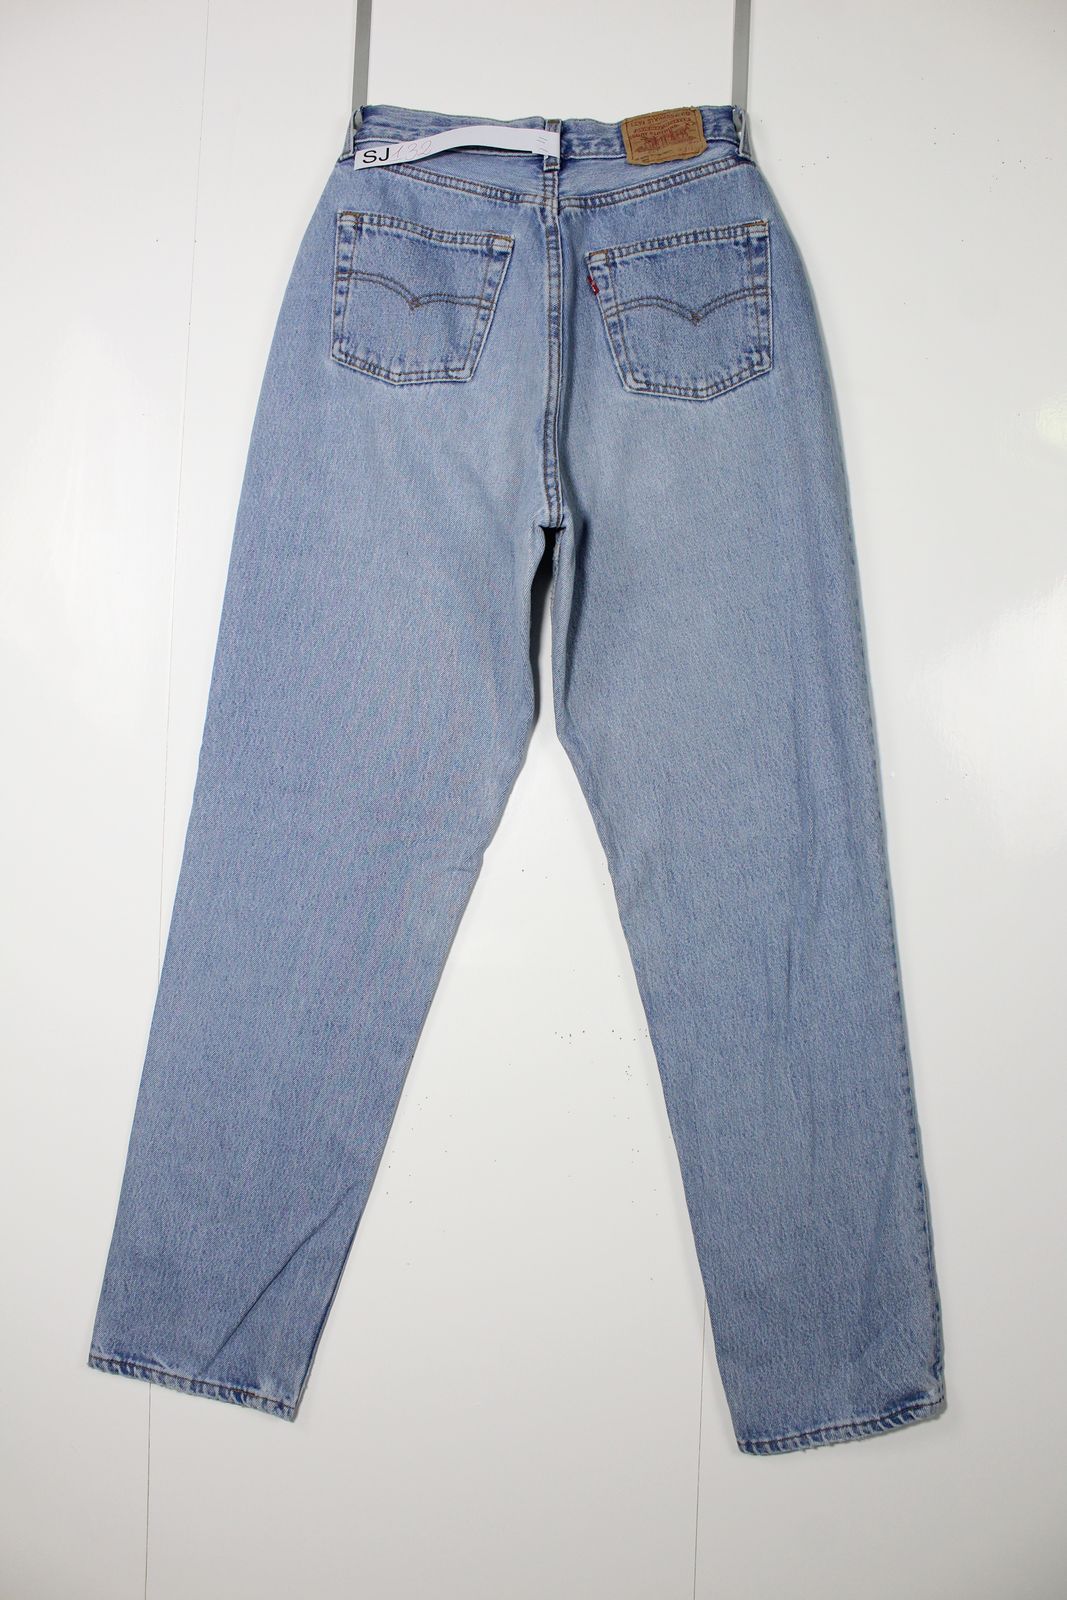 Levi's 901 Denim Made In USA W34 L32 Jeans Vintage